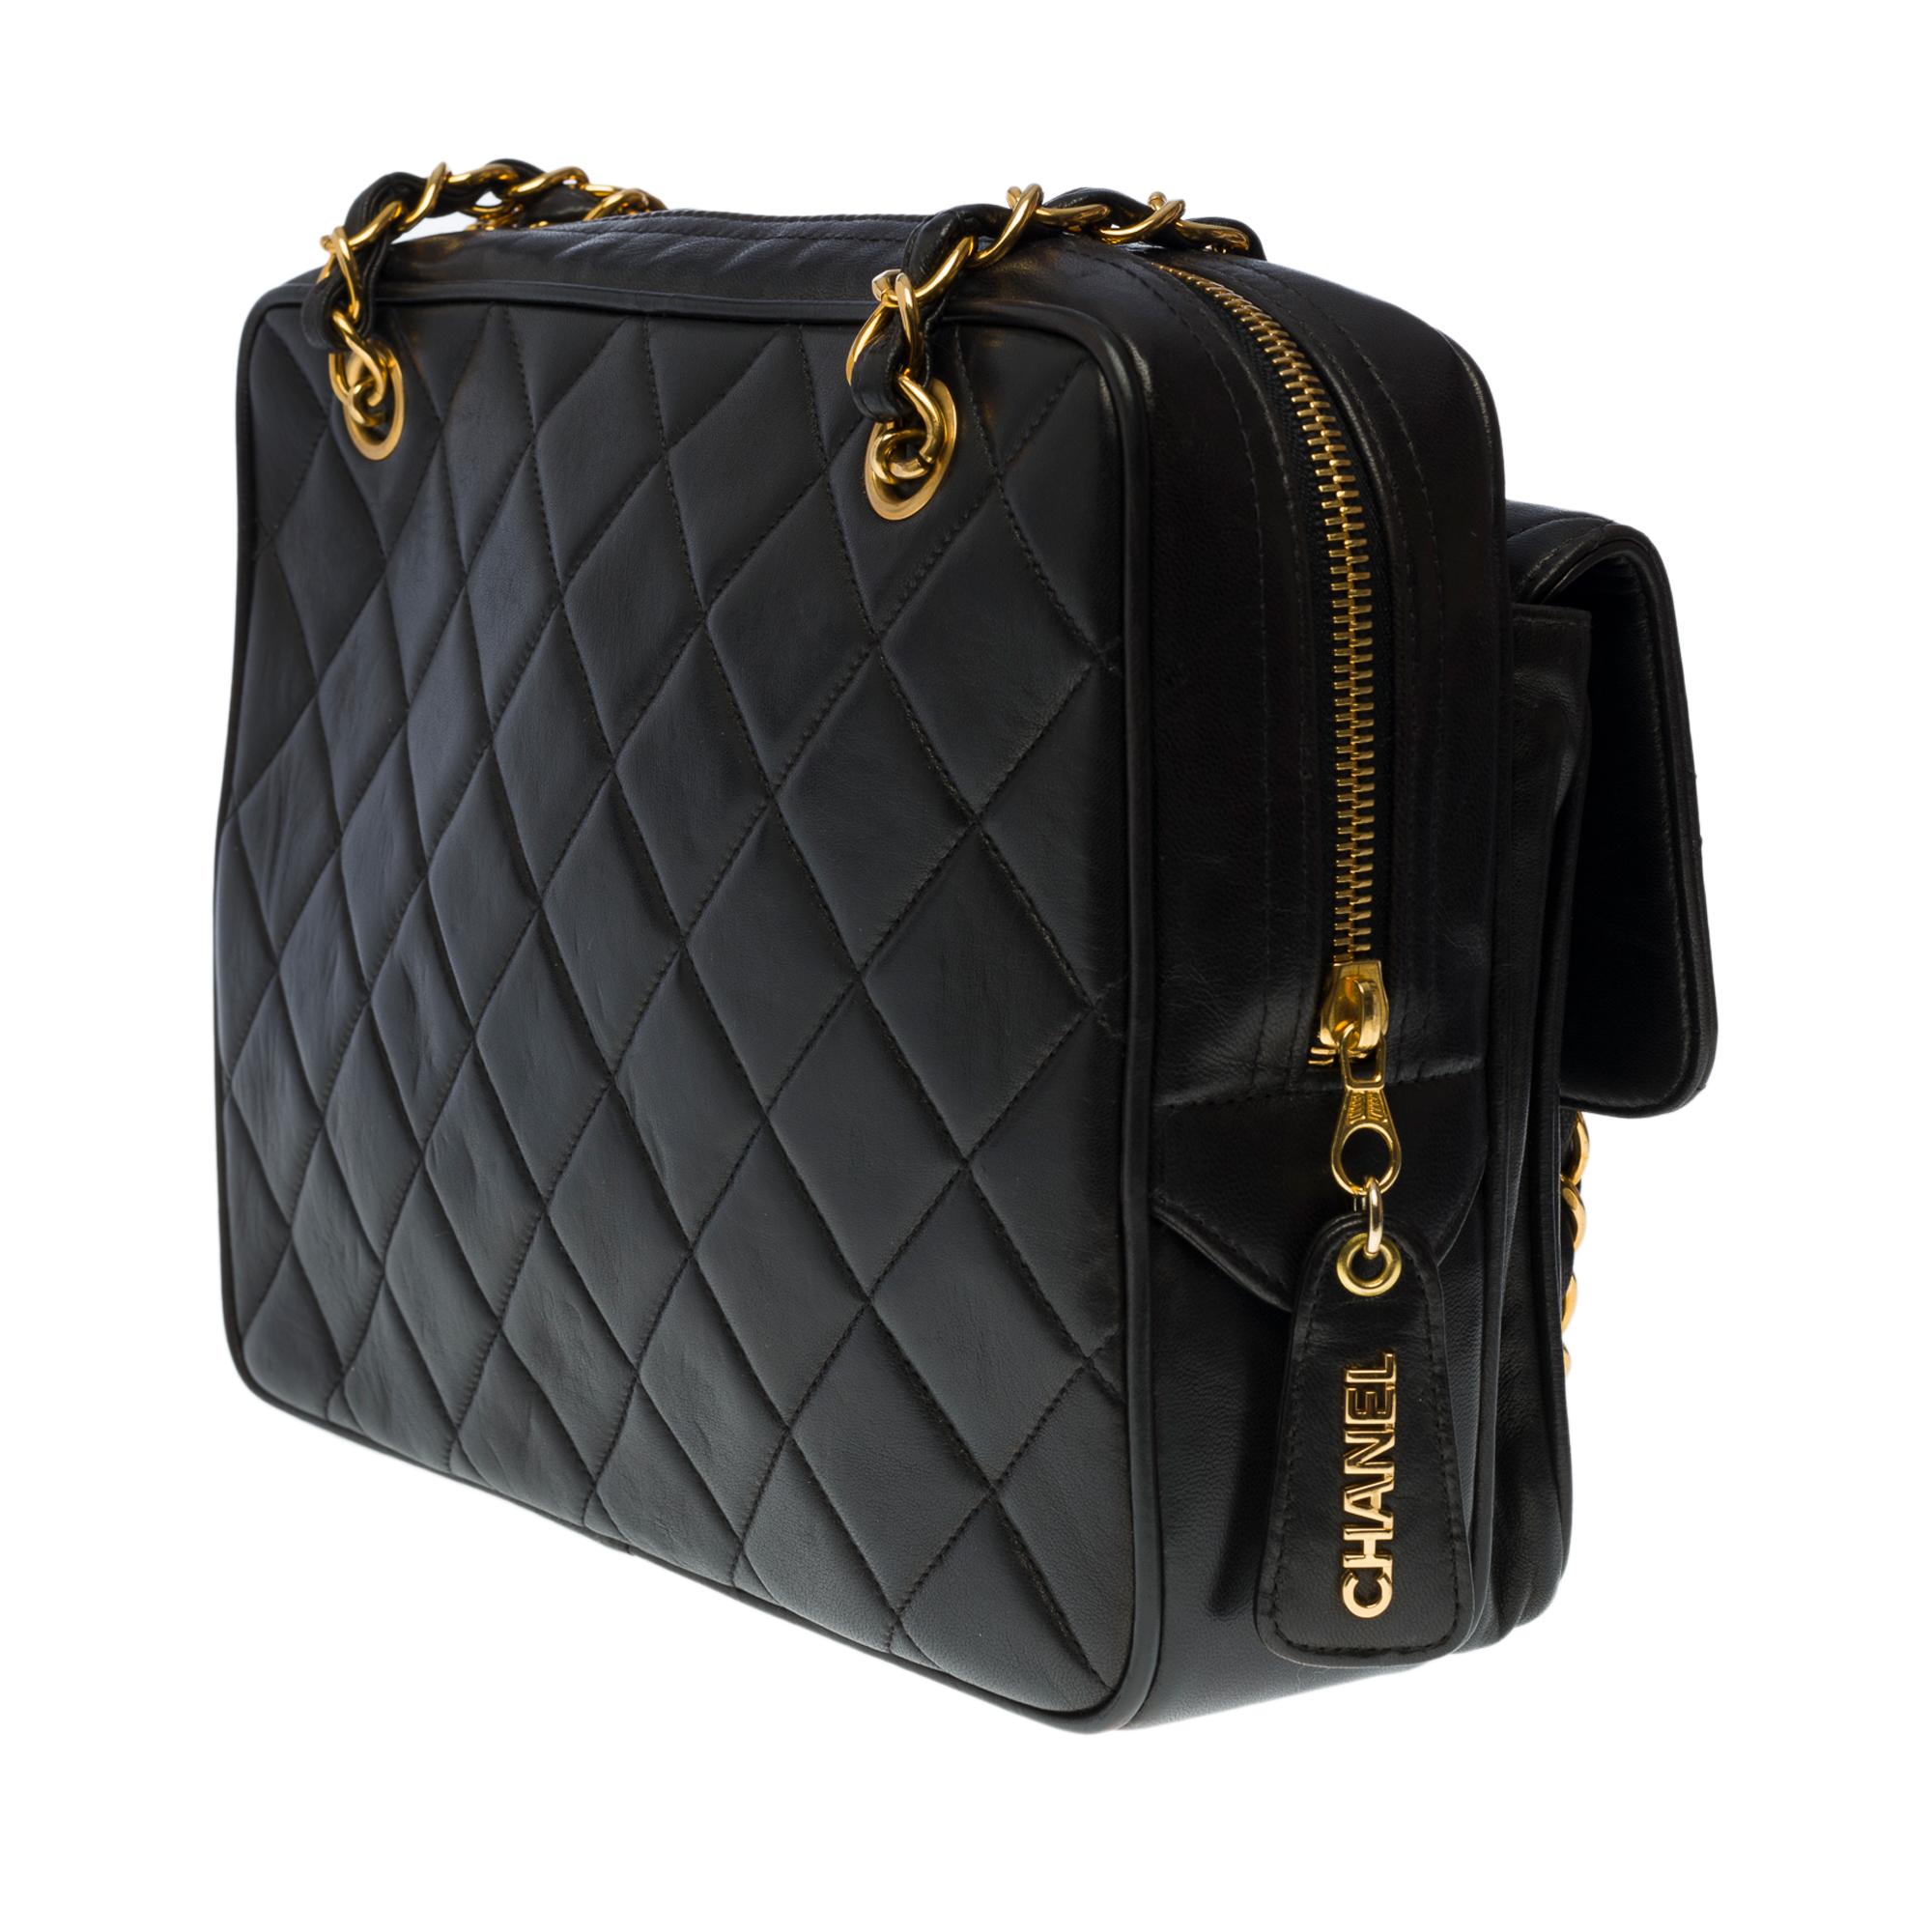 Black Chanel Camera GM shoulder flap bag in black quilted lambskin leather, GHW